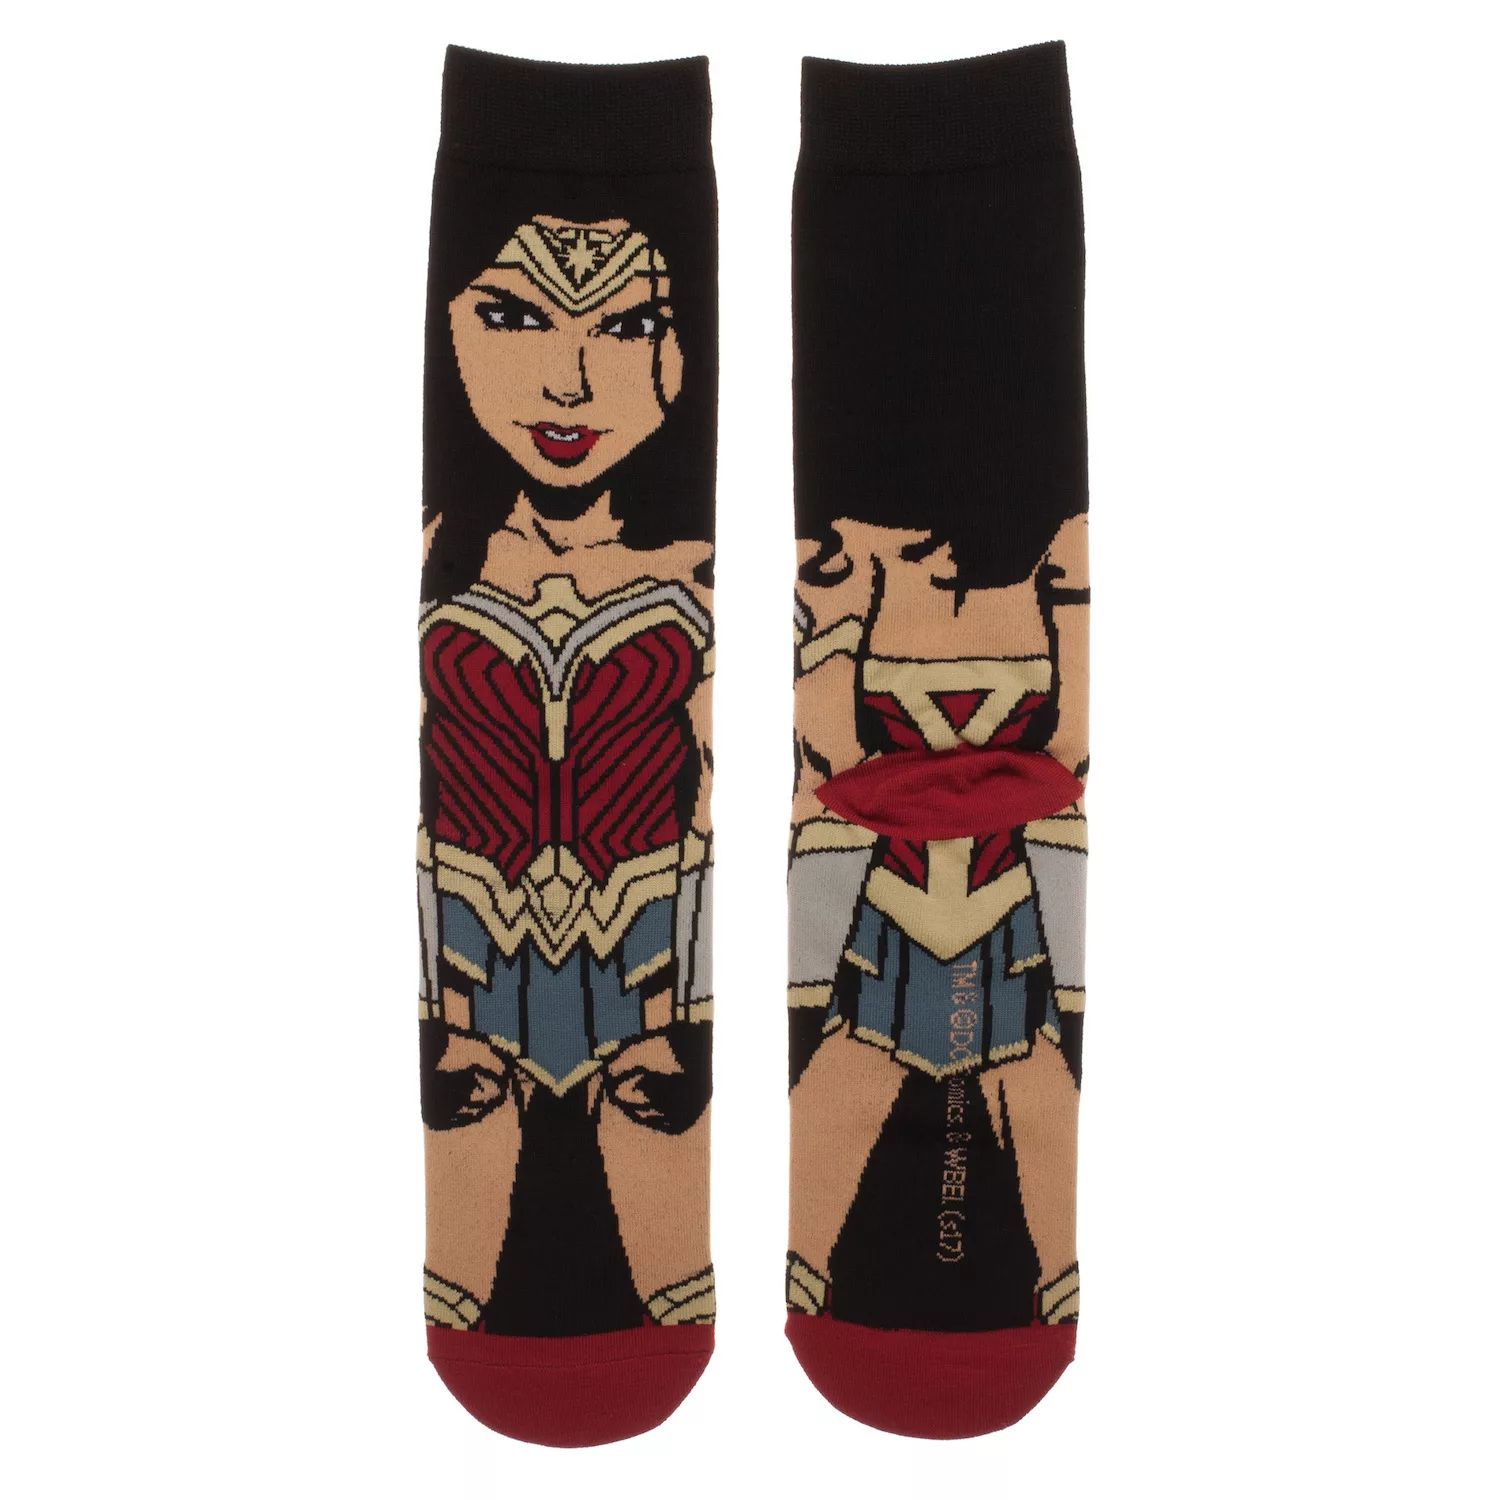 Мужские носки DC Comics Wonder Woman Movie Crew Licensed Character носки dc comics wonder woman – logo серые